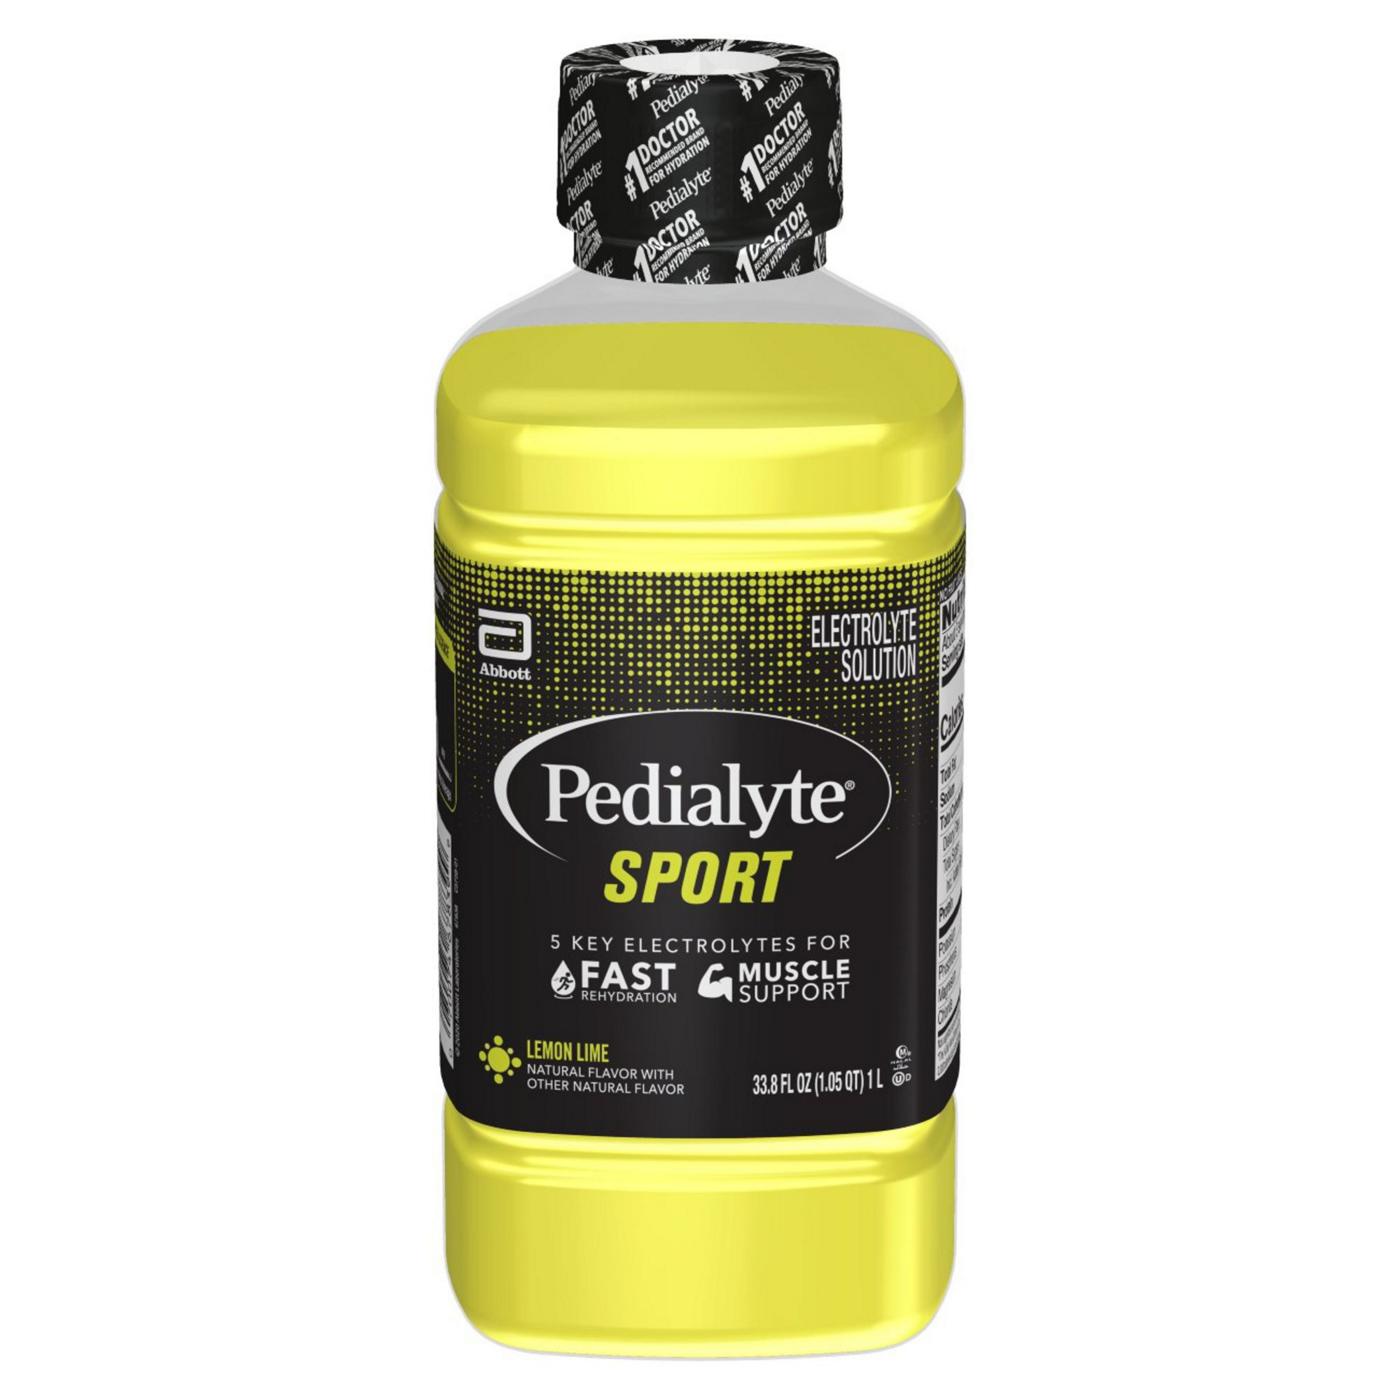 Pedialyte Sport Electrolyte Solution - Lemon Lime; image 7 of 9